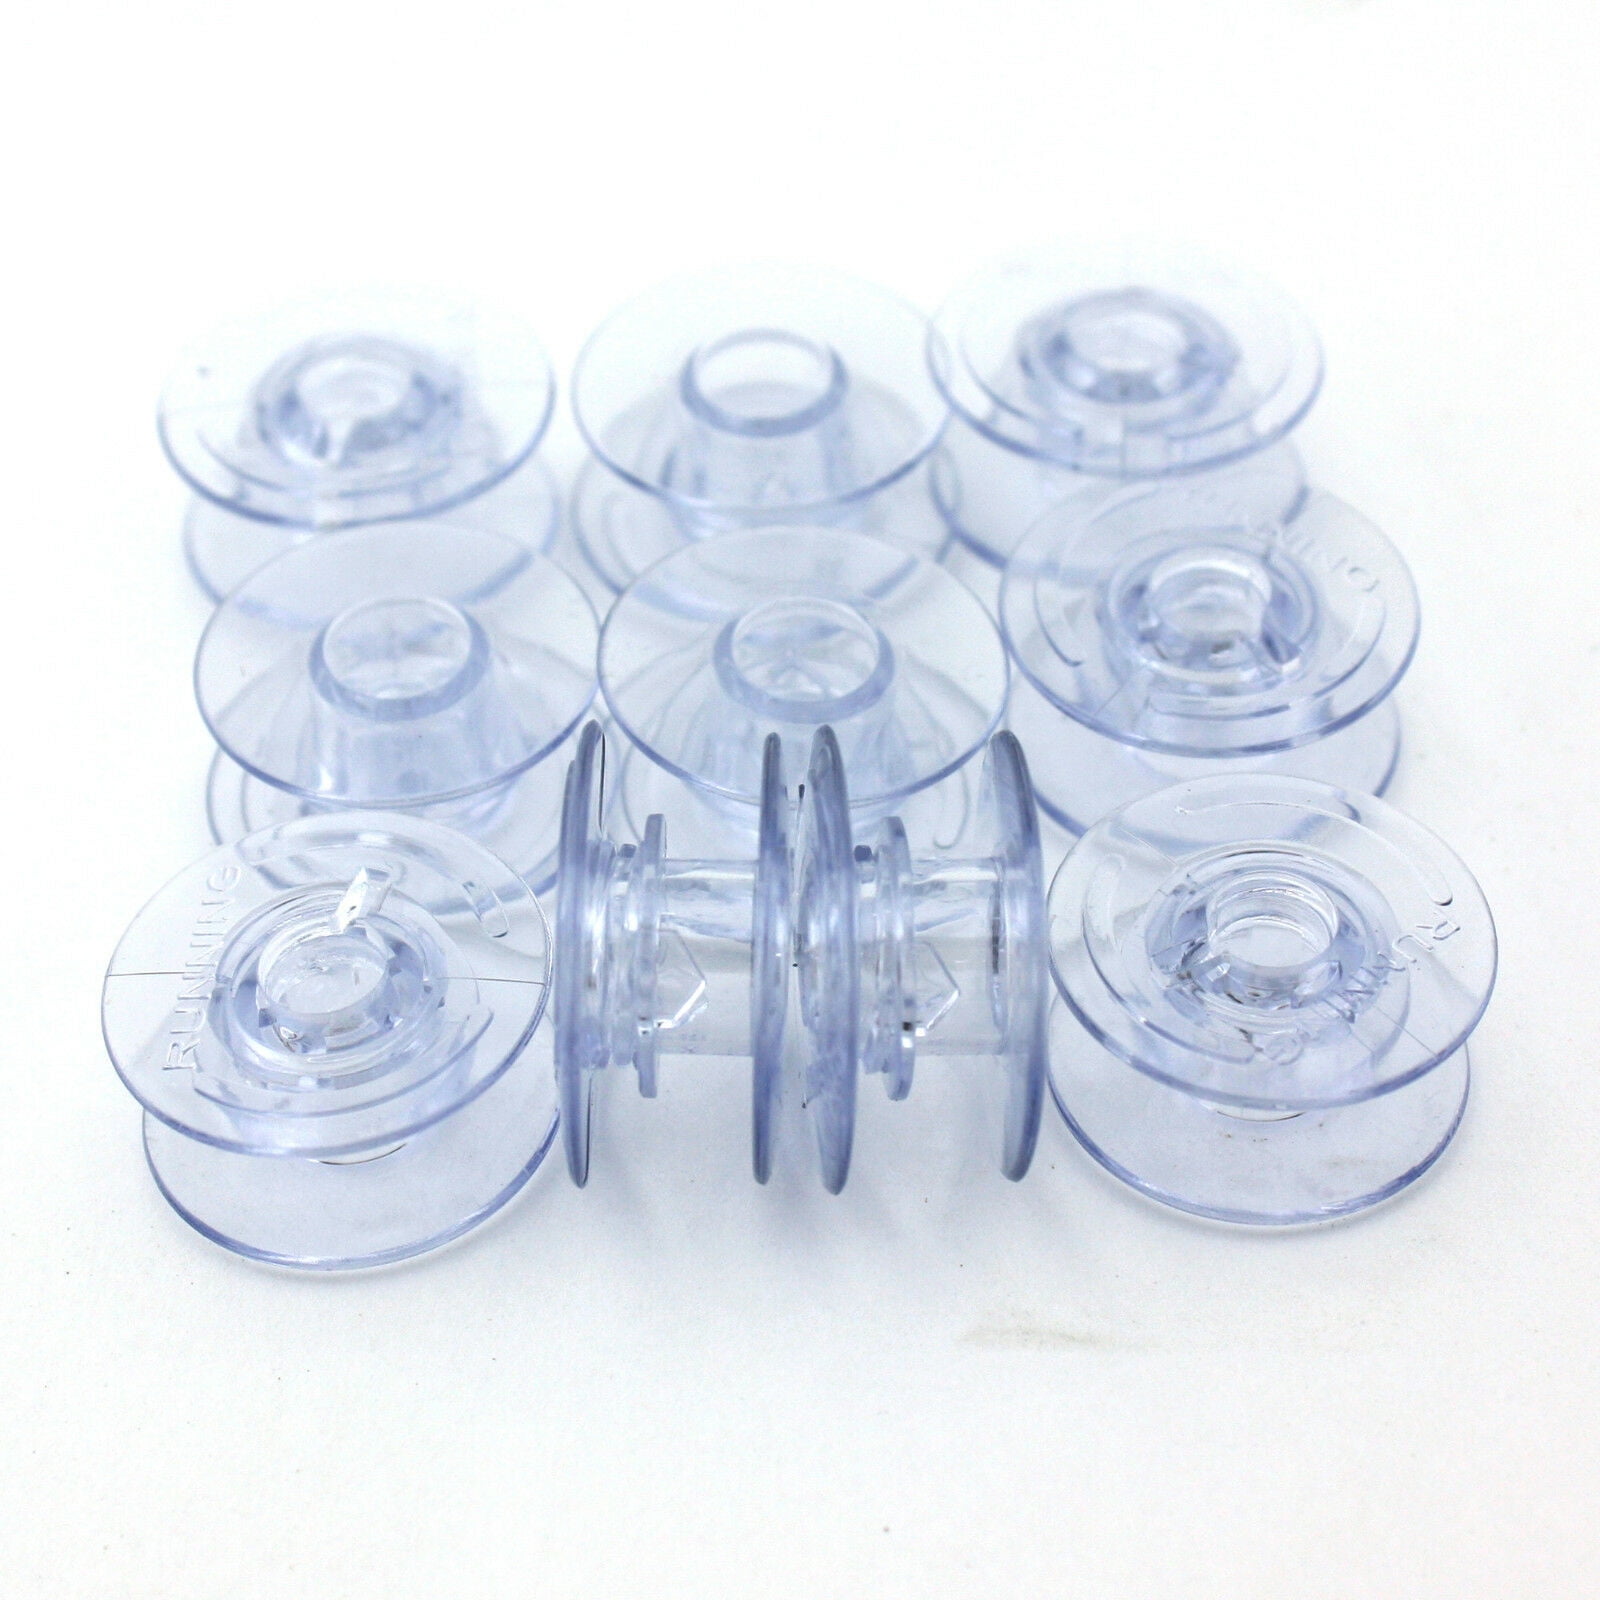 Cutex Brand 10 Pk Pfaff Plastic Bobbin #93-040970-45 For Many Pfaff Model Sewing Machines